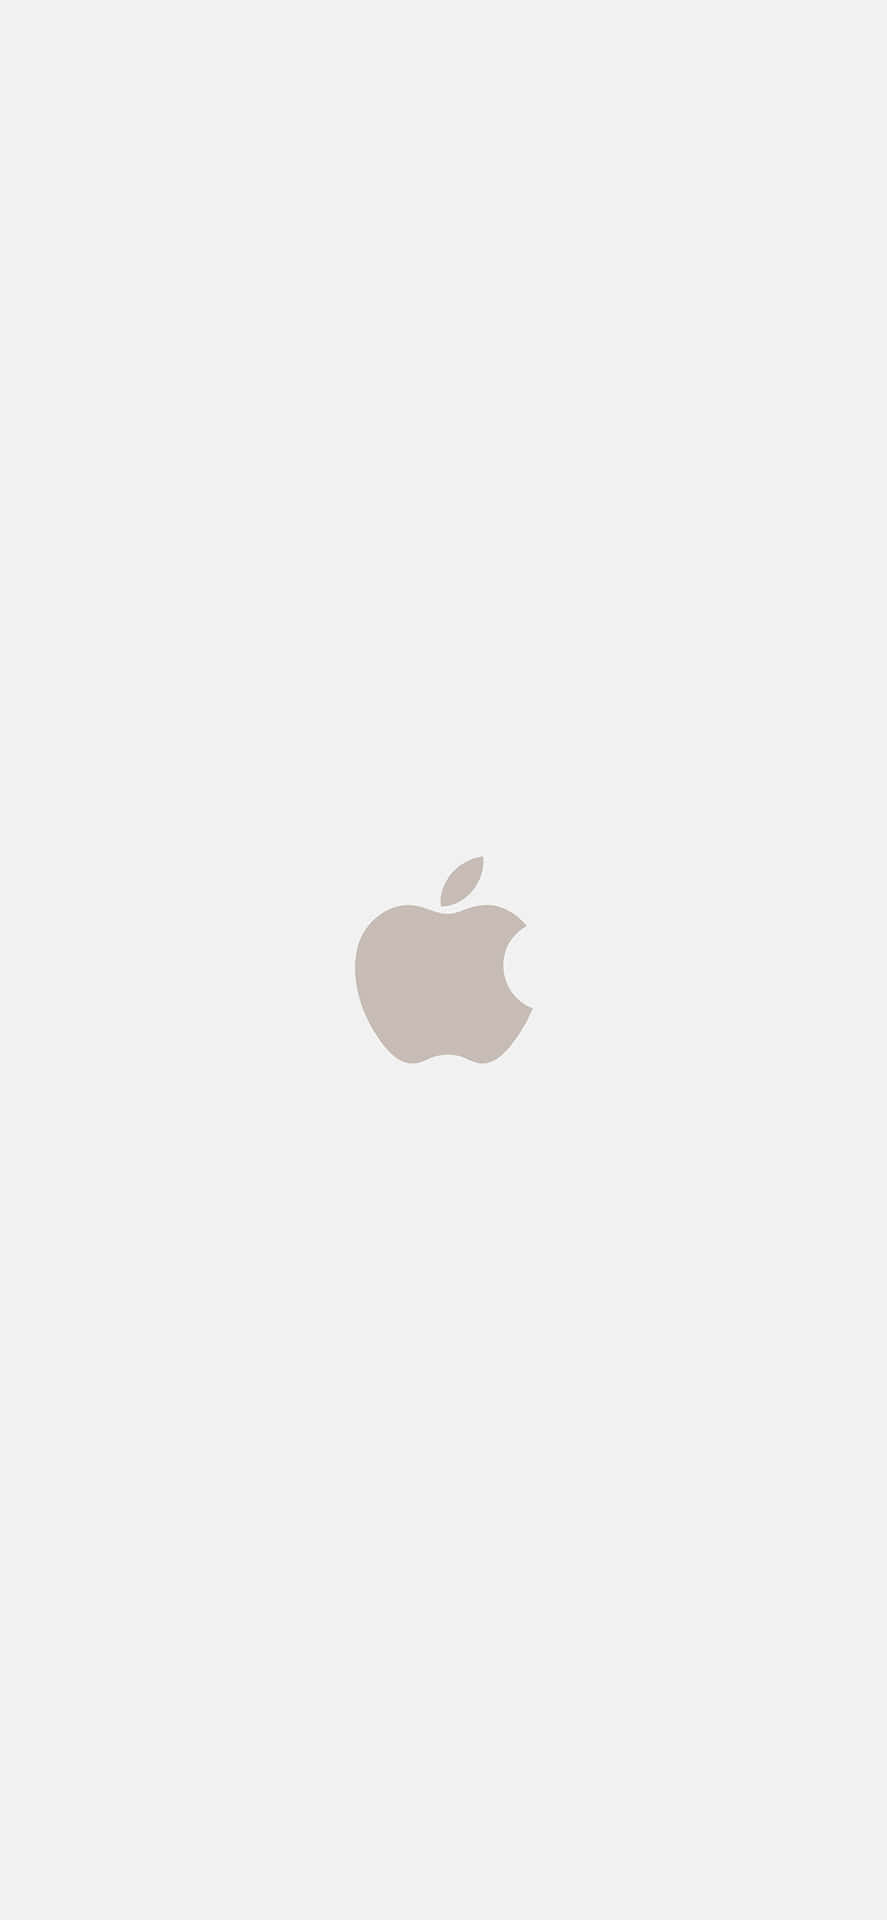 Beige Iphone X Apple Logo Wallpaper